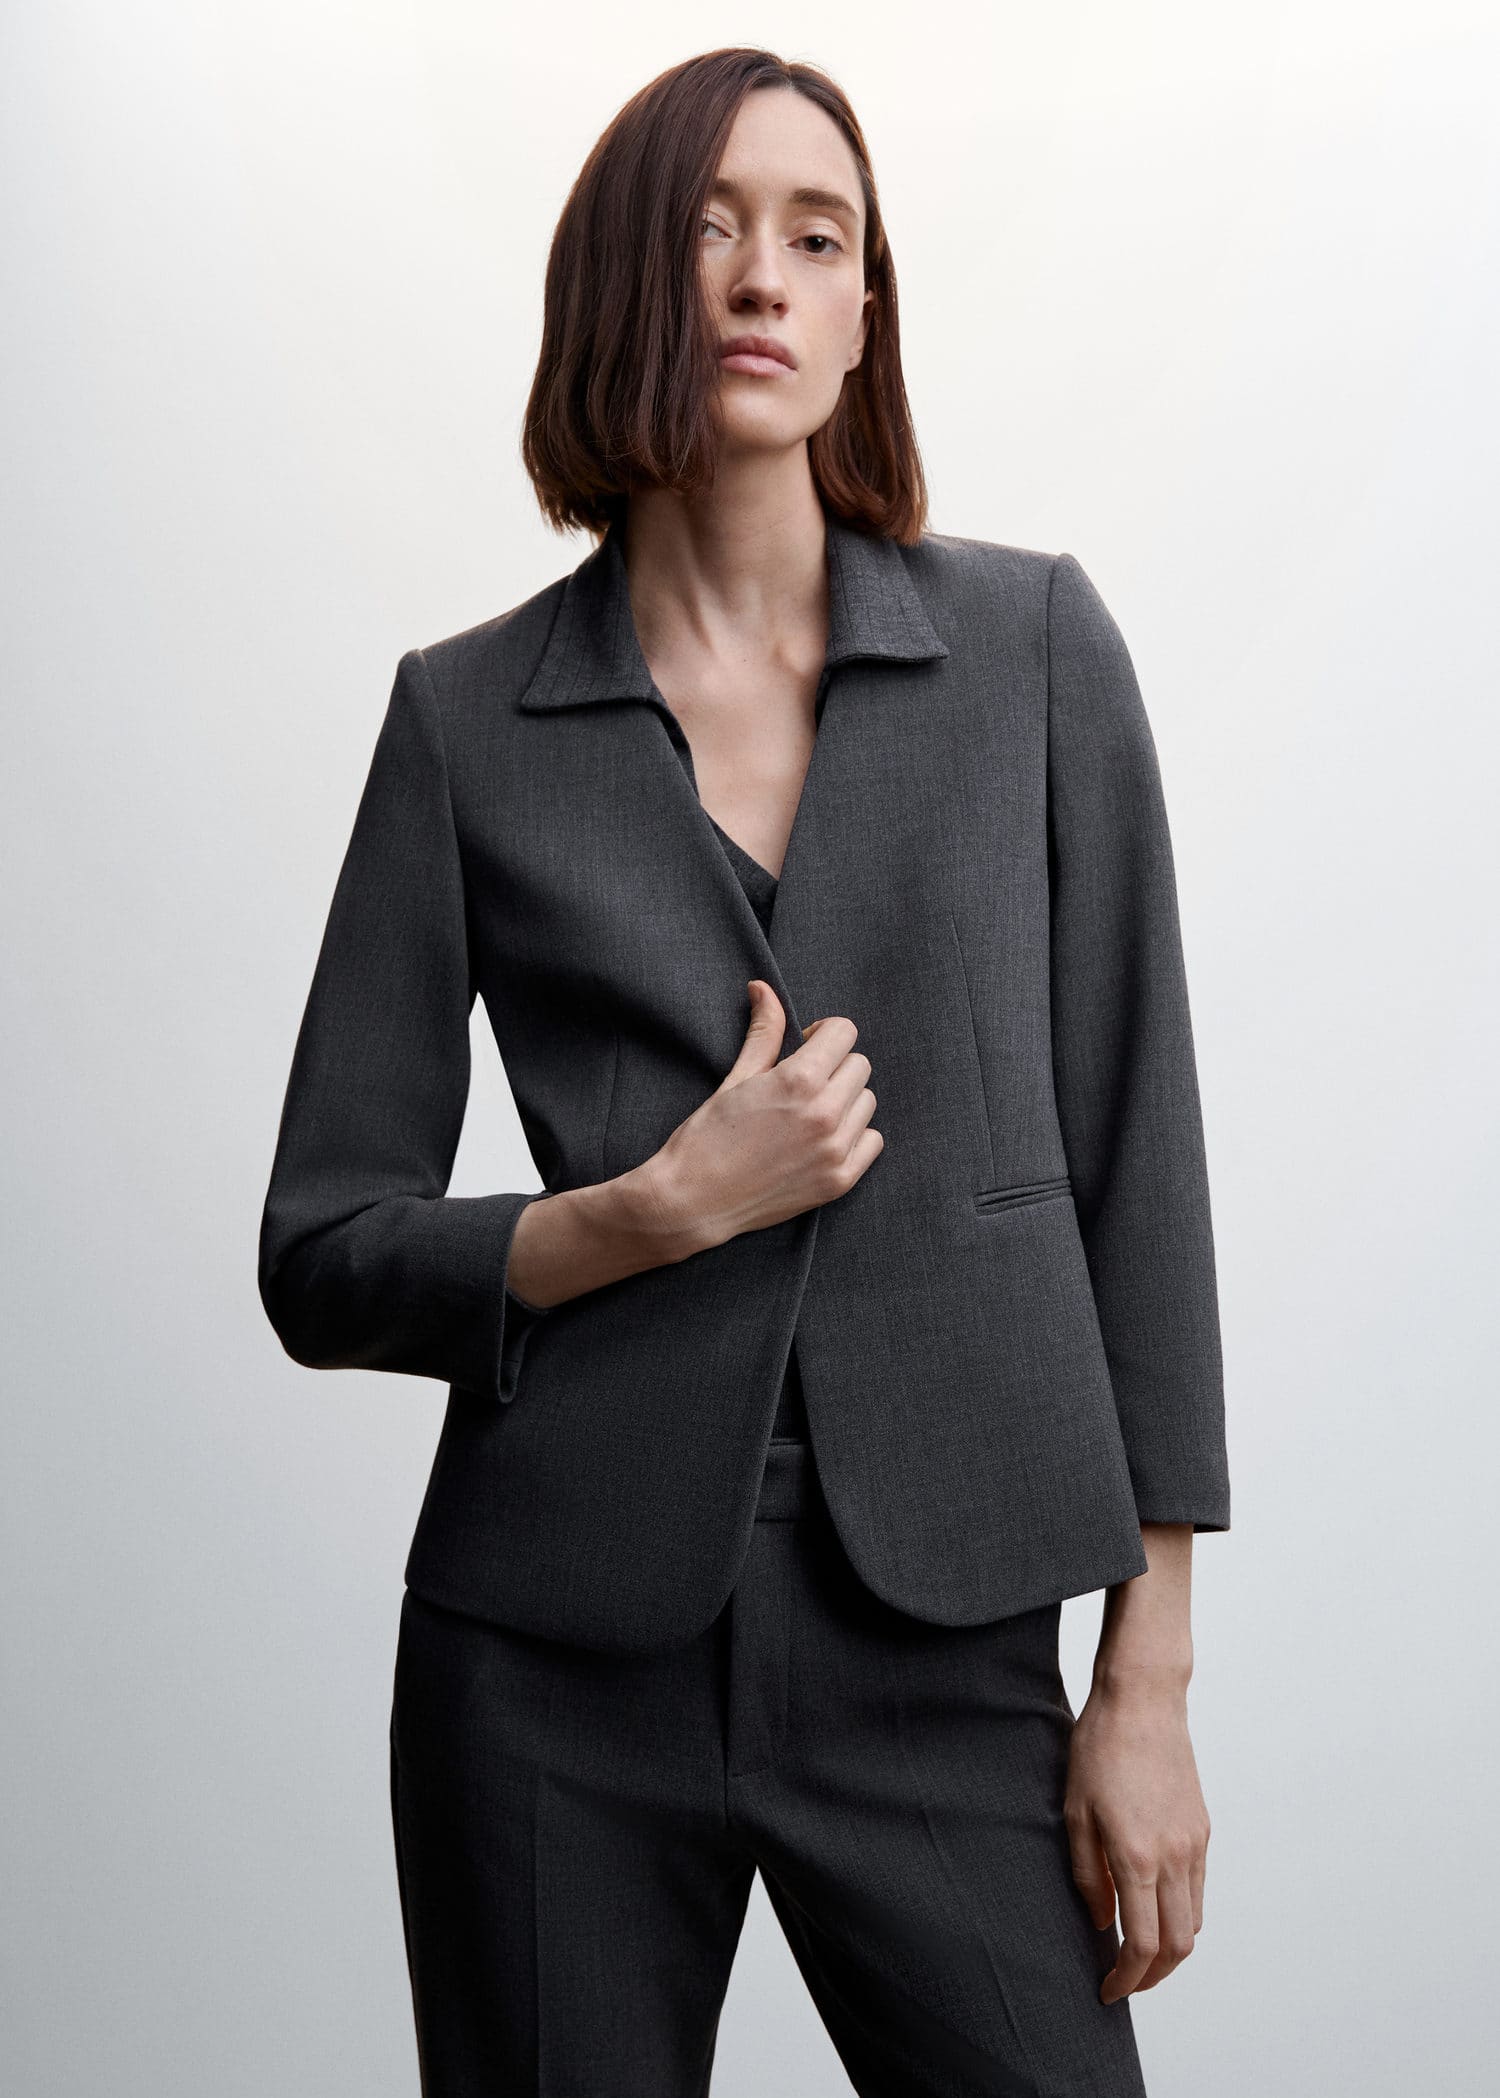 Collarless suit jacket - Medium plane